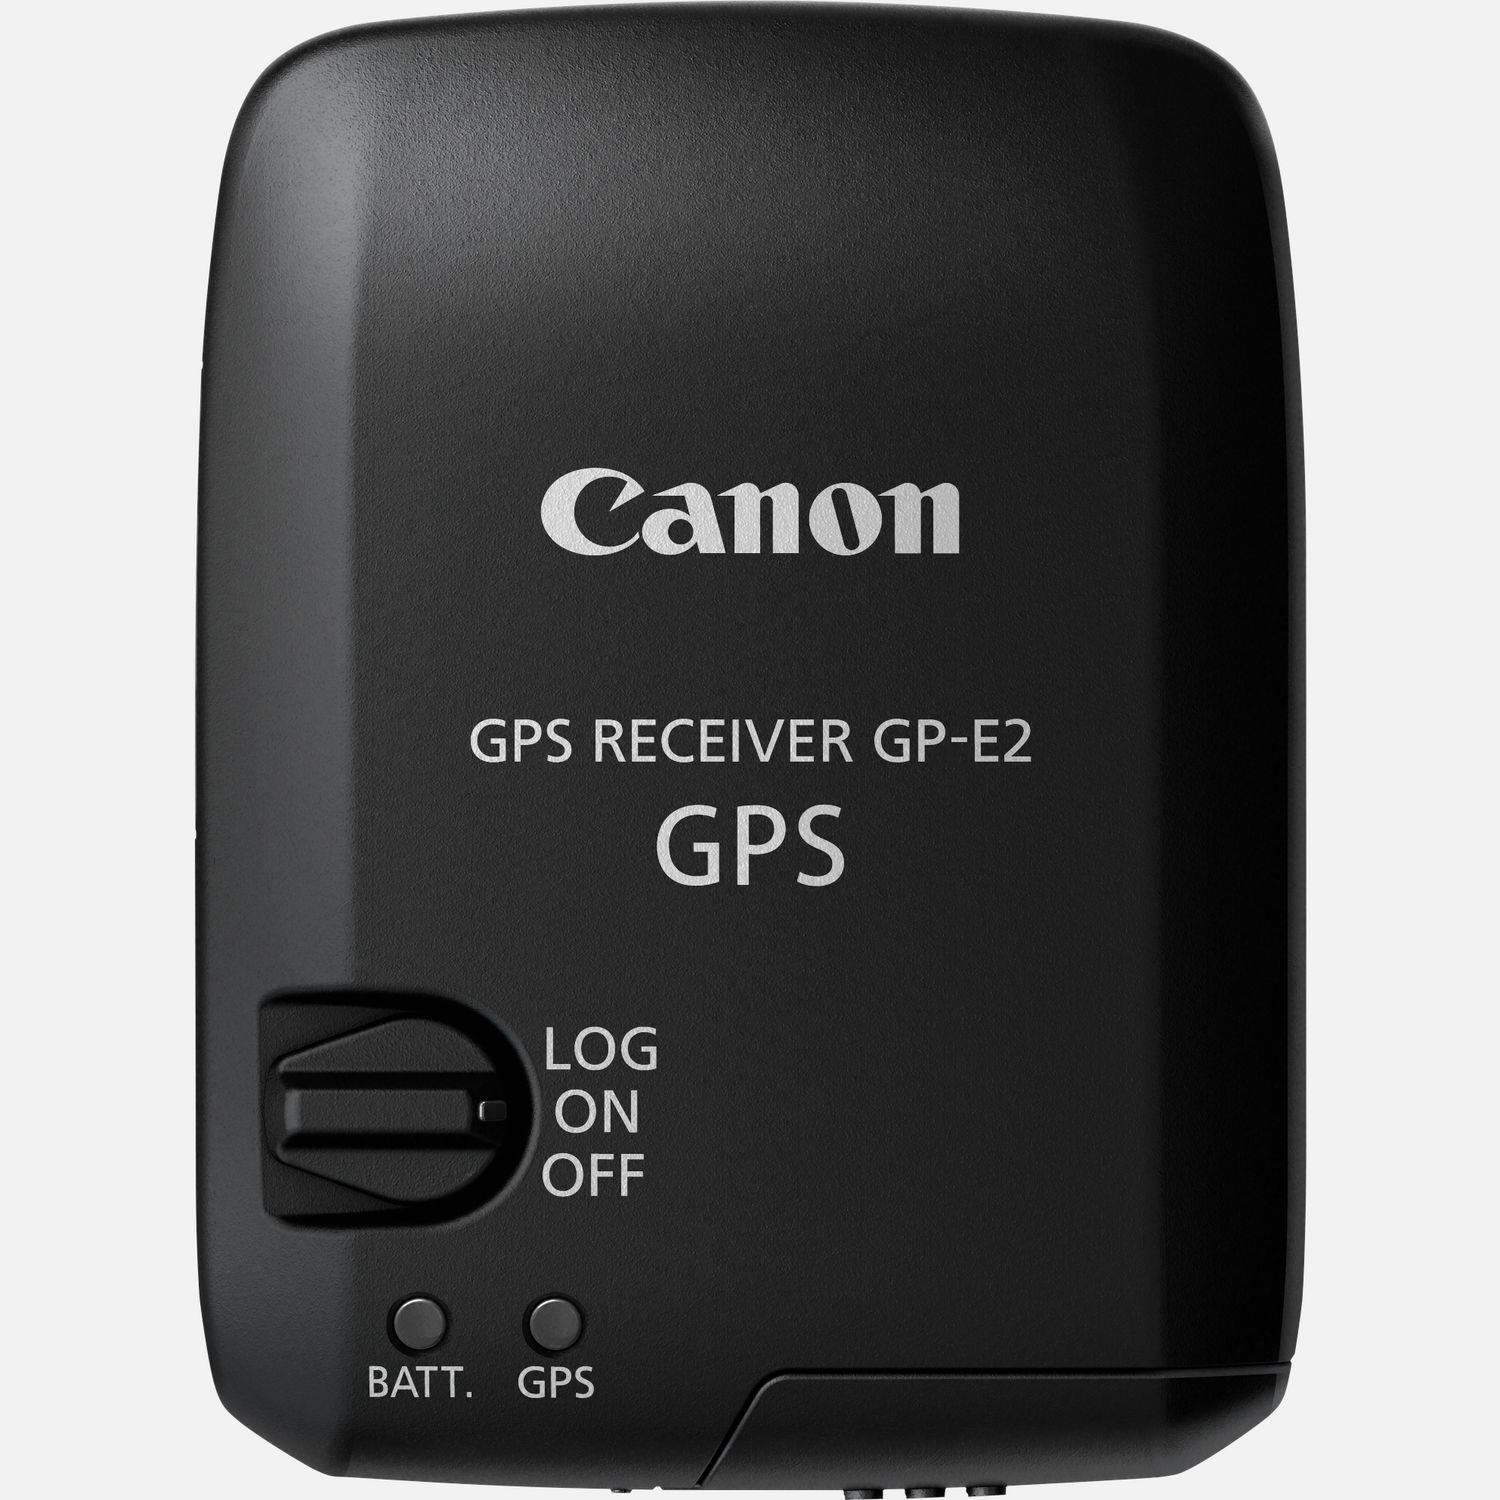 Goed doen Geleidbaarheid Laboratorium Canon GP-E2 GPS-ontvanger — Canon Nederland Store